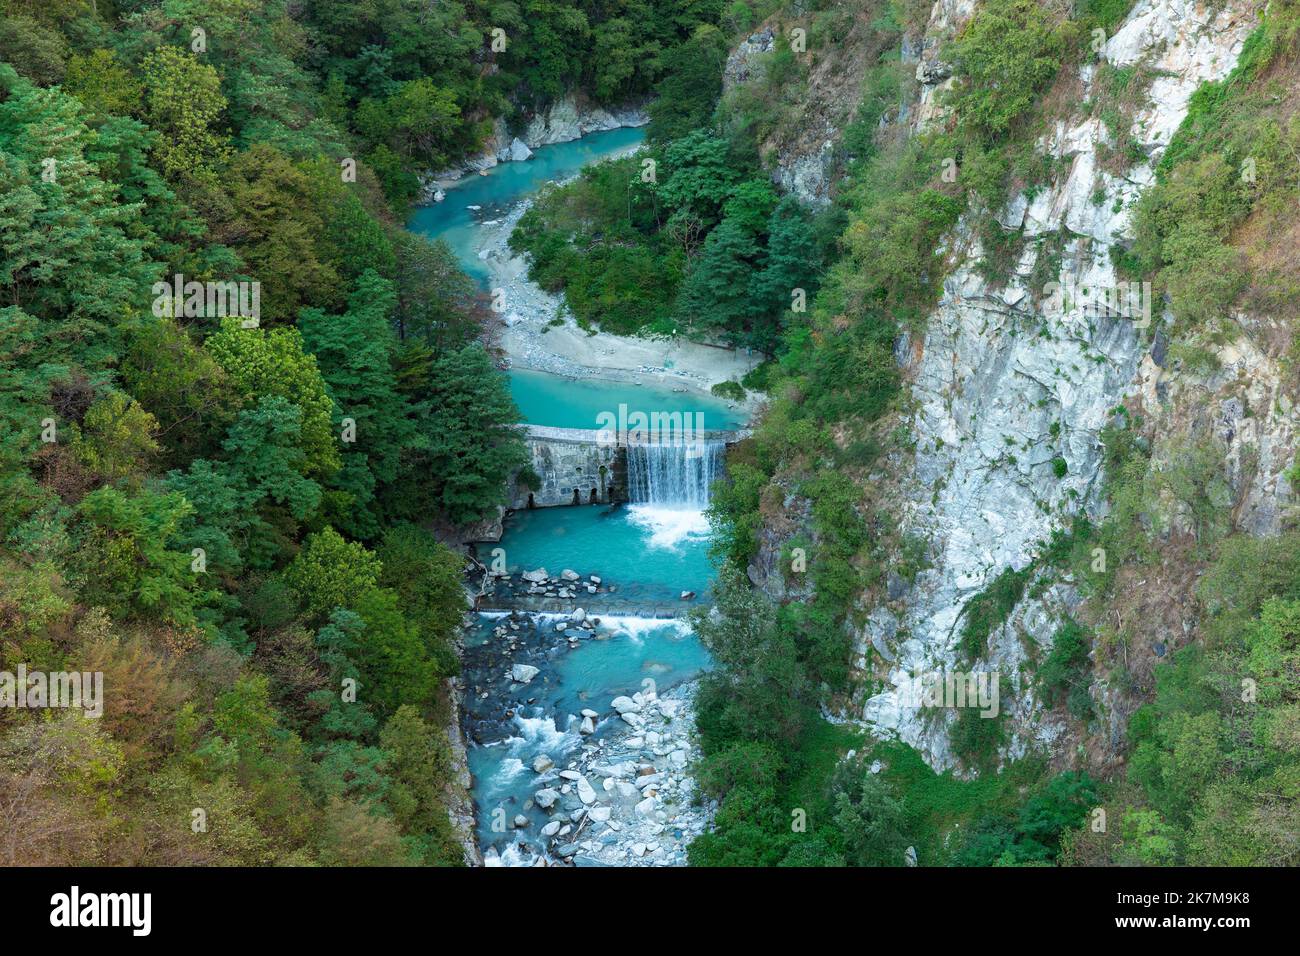 Aerial view of cascades at Gola delle Casandre gorge at Sondrio, Valtellina, Italy Stock Photo